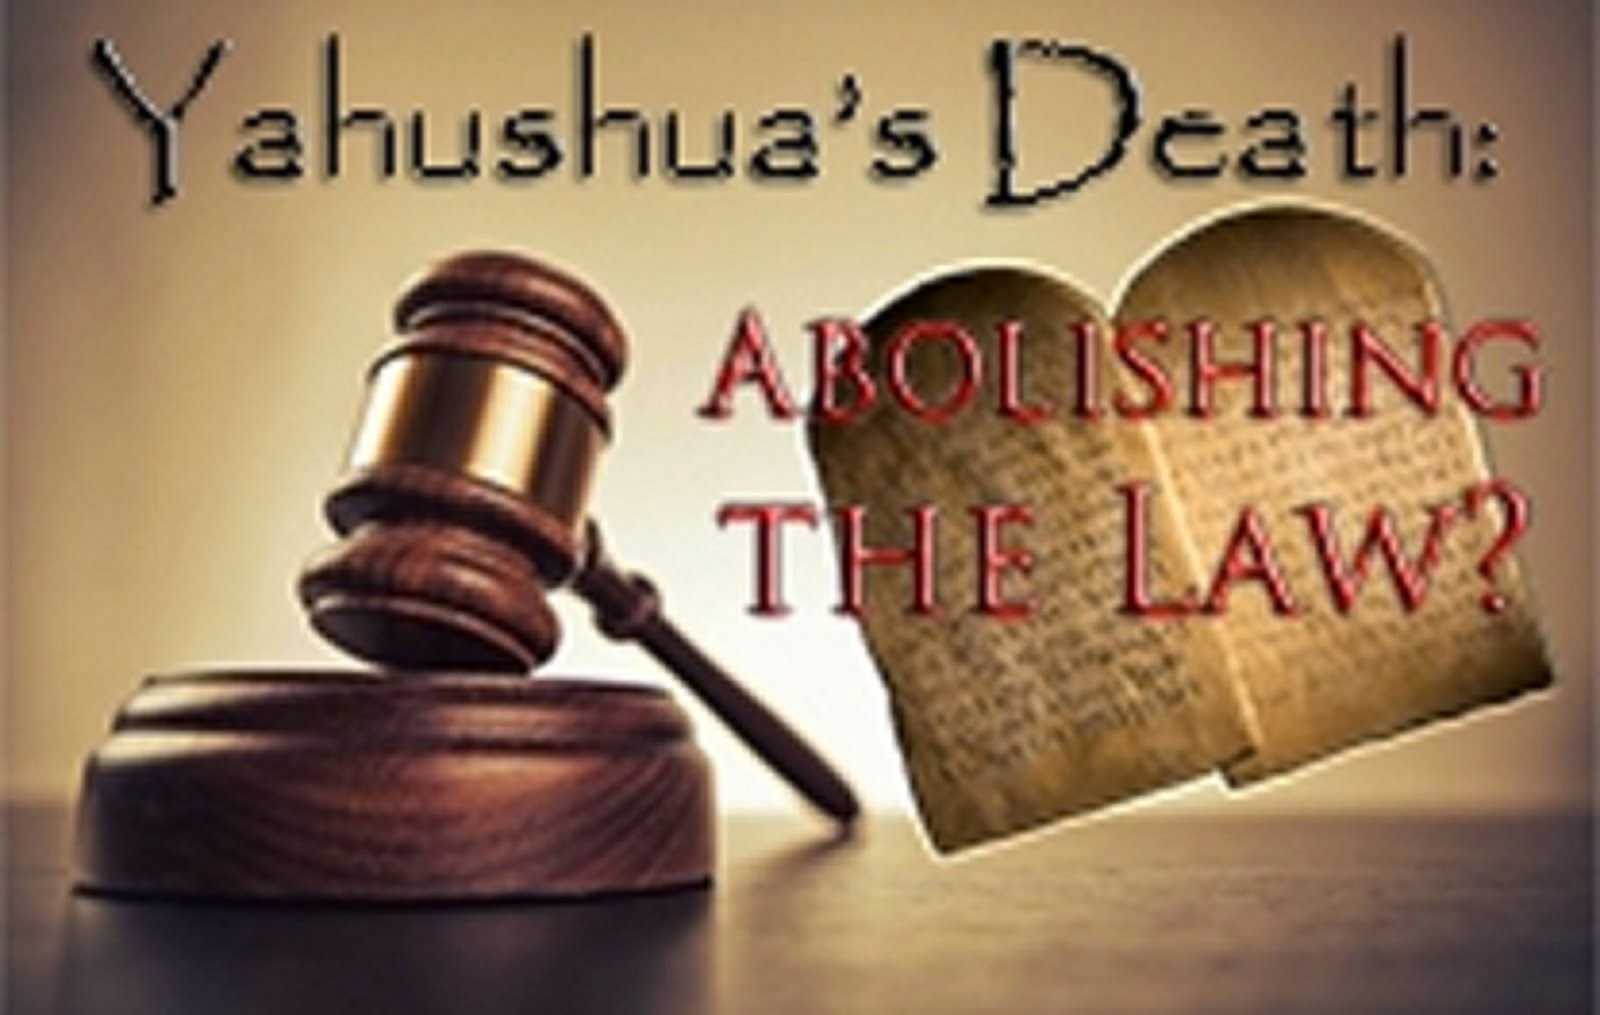 YAHUSHUA'S DEATH:  ABOLISHING THE LAW?